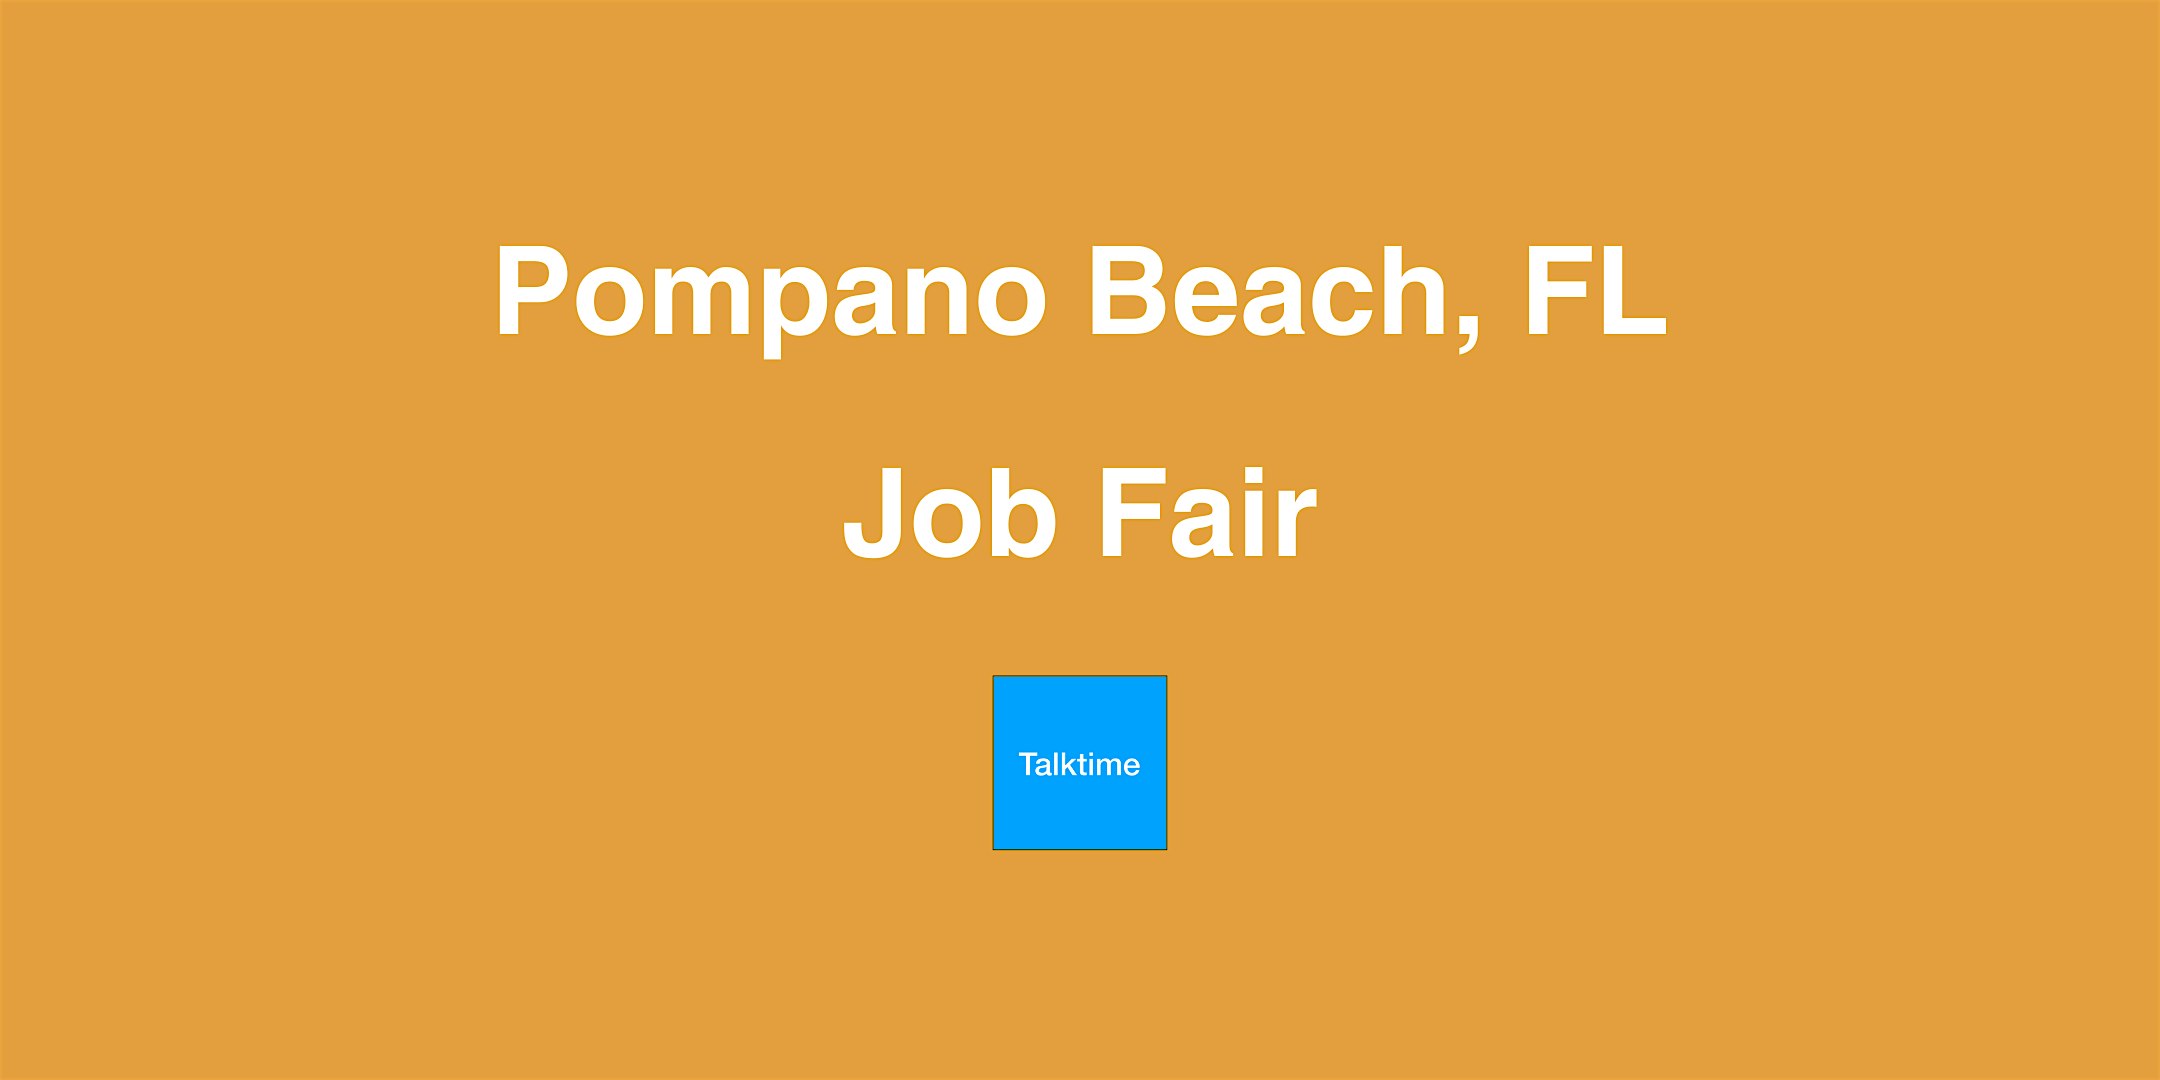 Job Fair - Pompano Beach